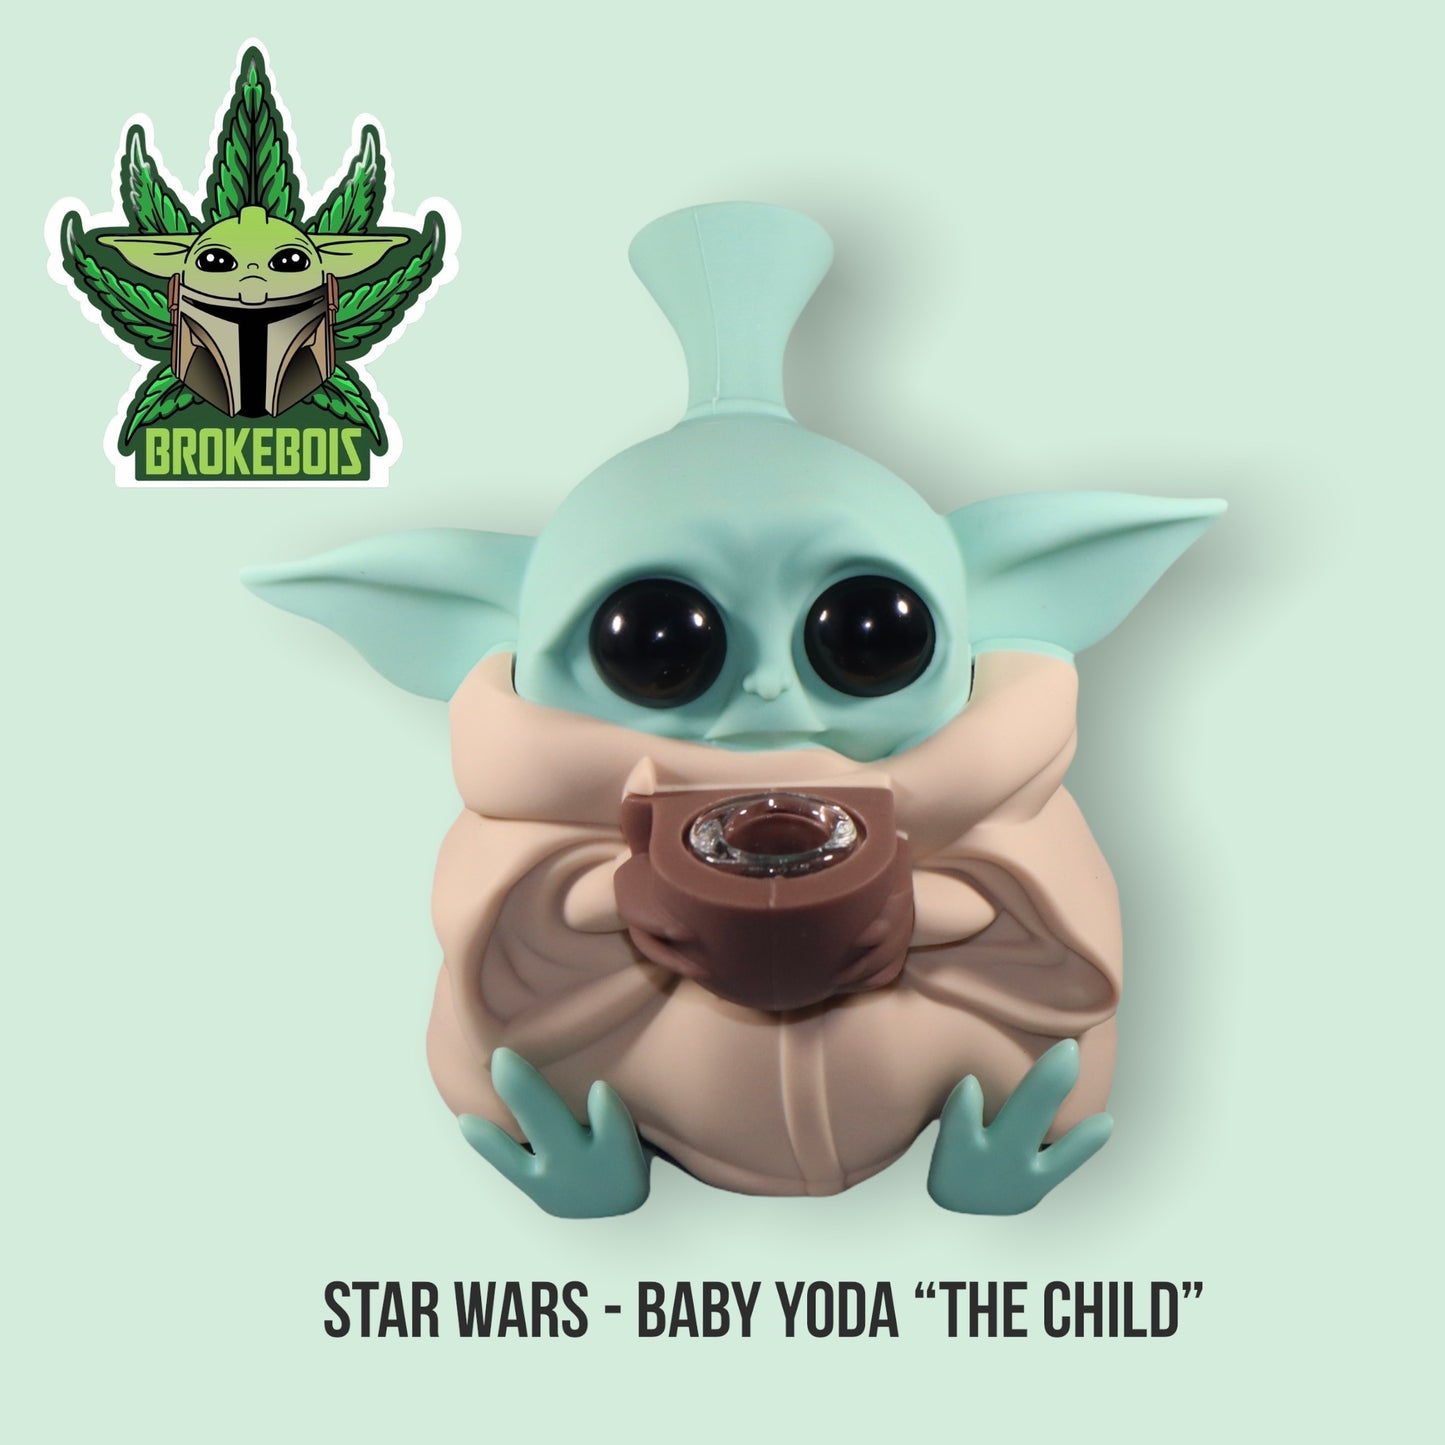 Star Wars Baby Yoda Silicone Water Bong - Grogu "The Flower Child"